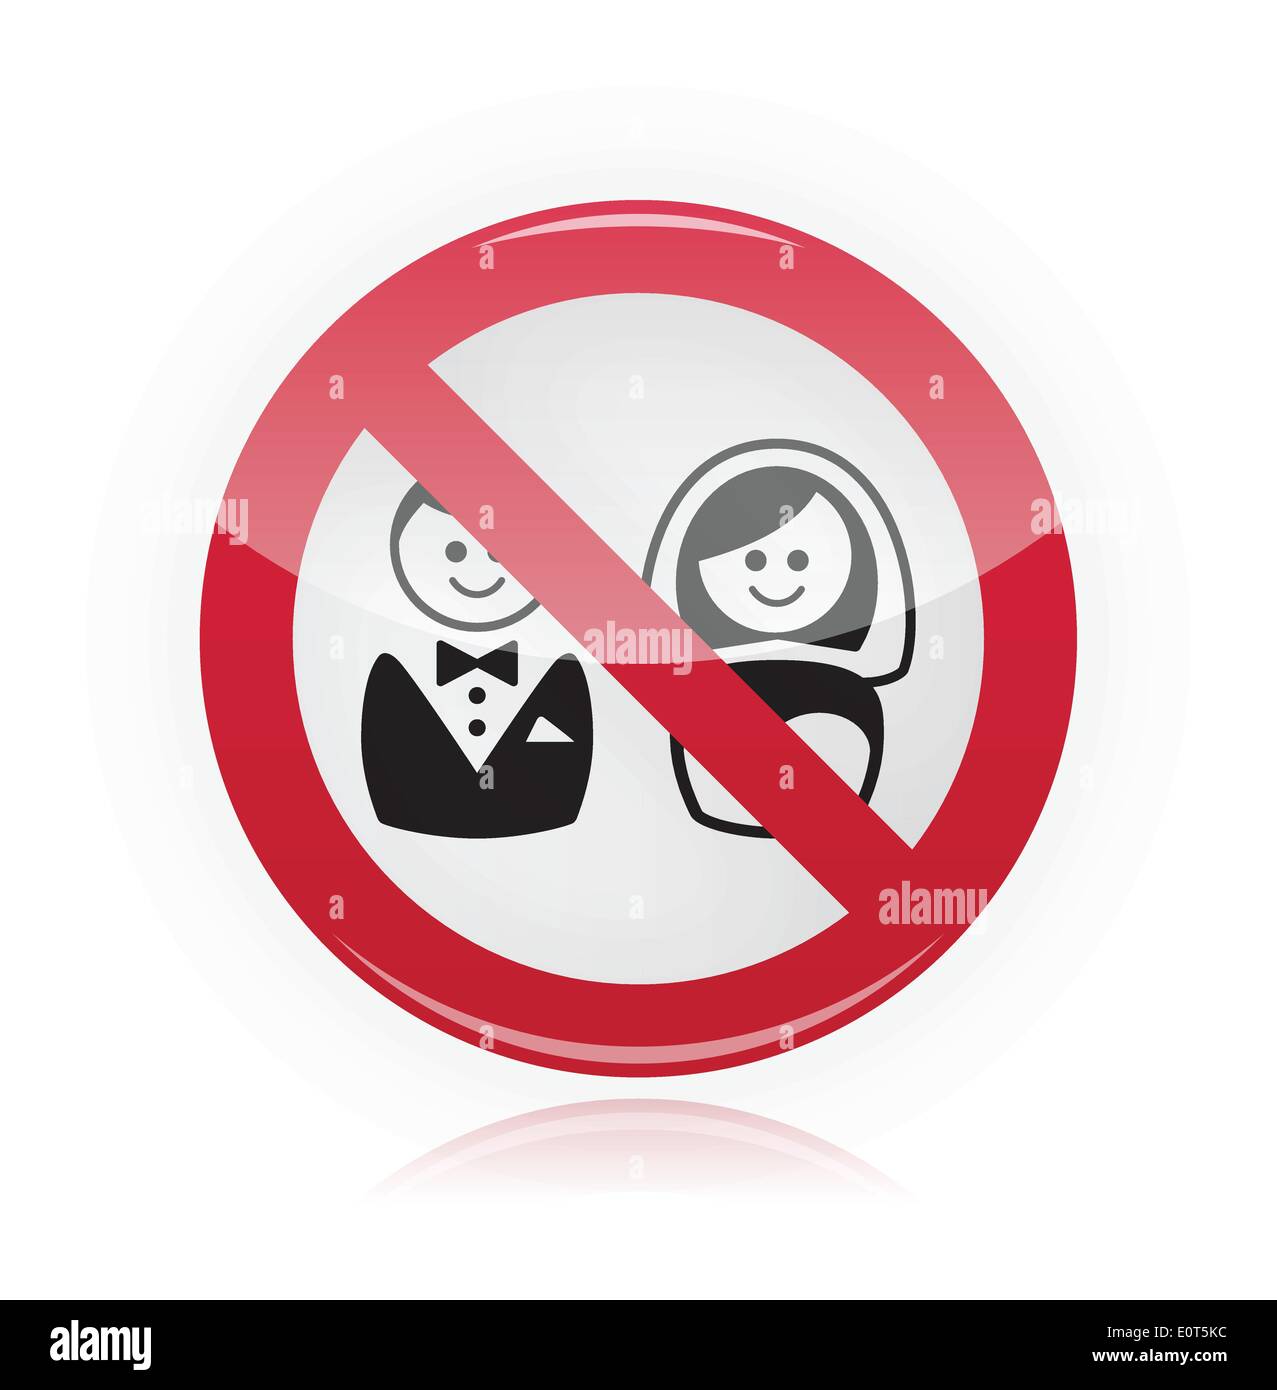 Запрет на брак 12